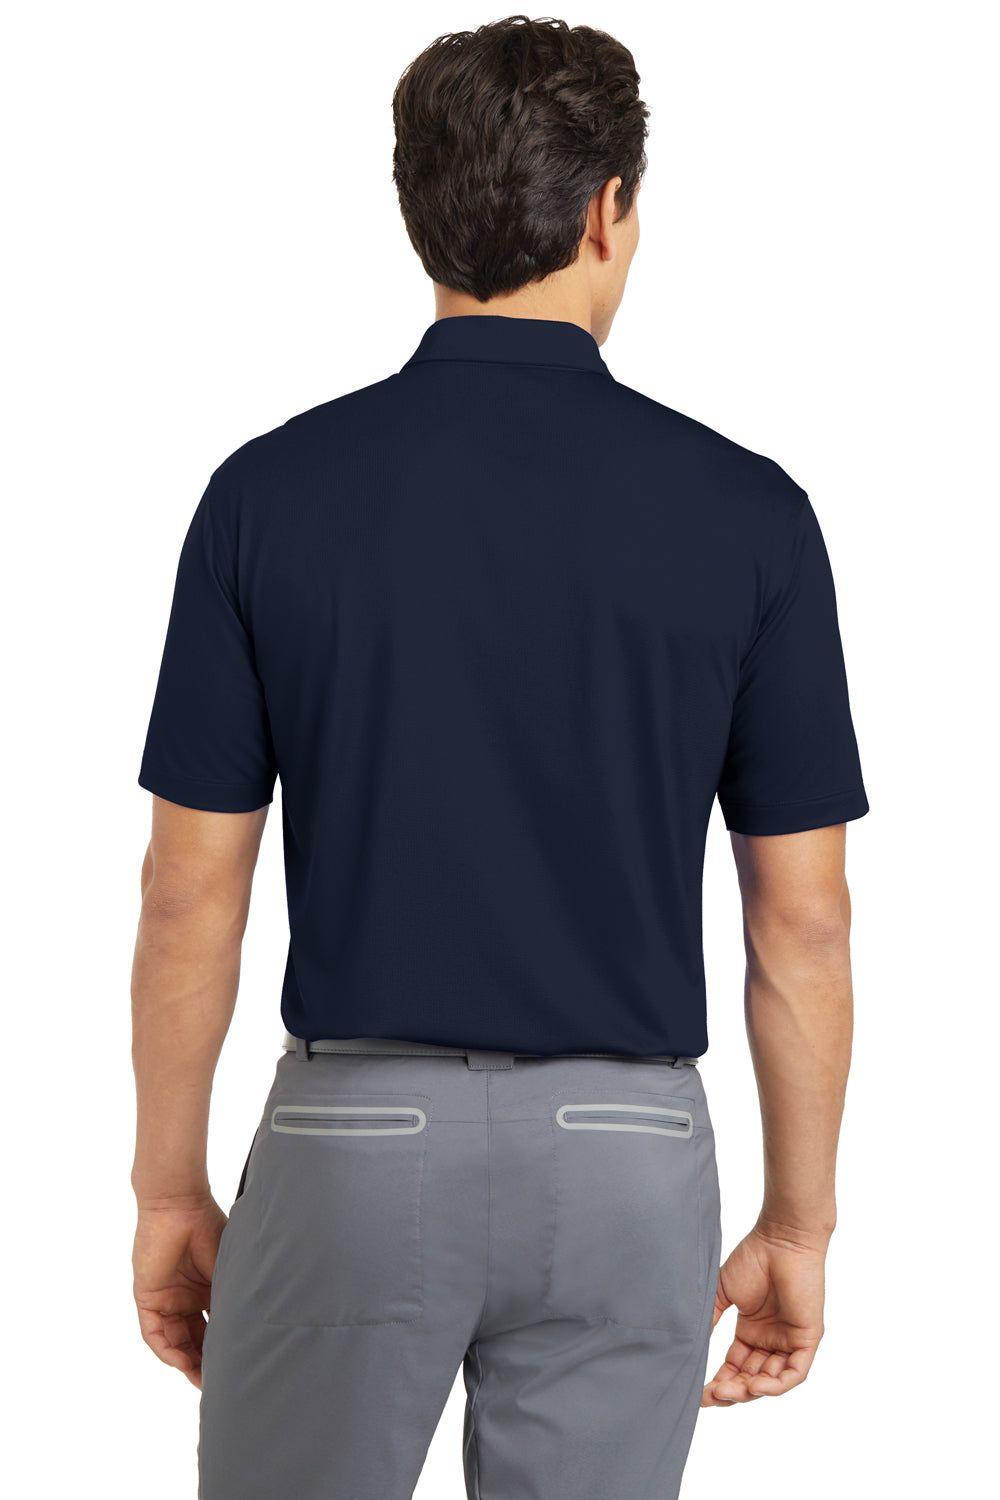 Nike 637167 Mens Dri-Fit Moisture Wicking Short Sleeve Polo Shirt Marine Blue Model Back